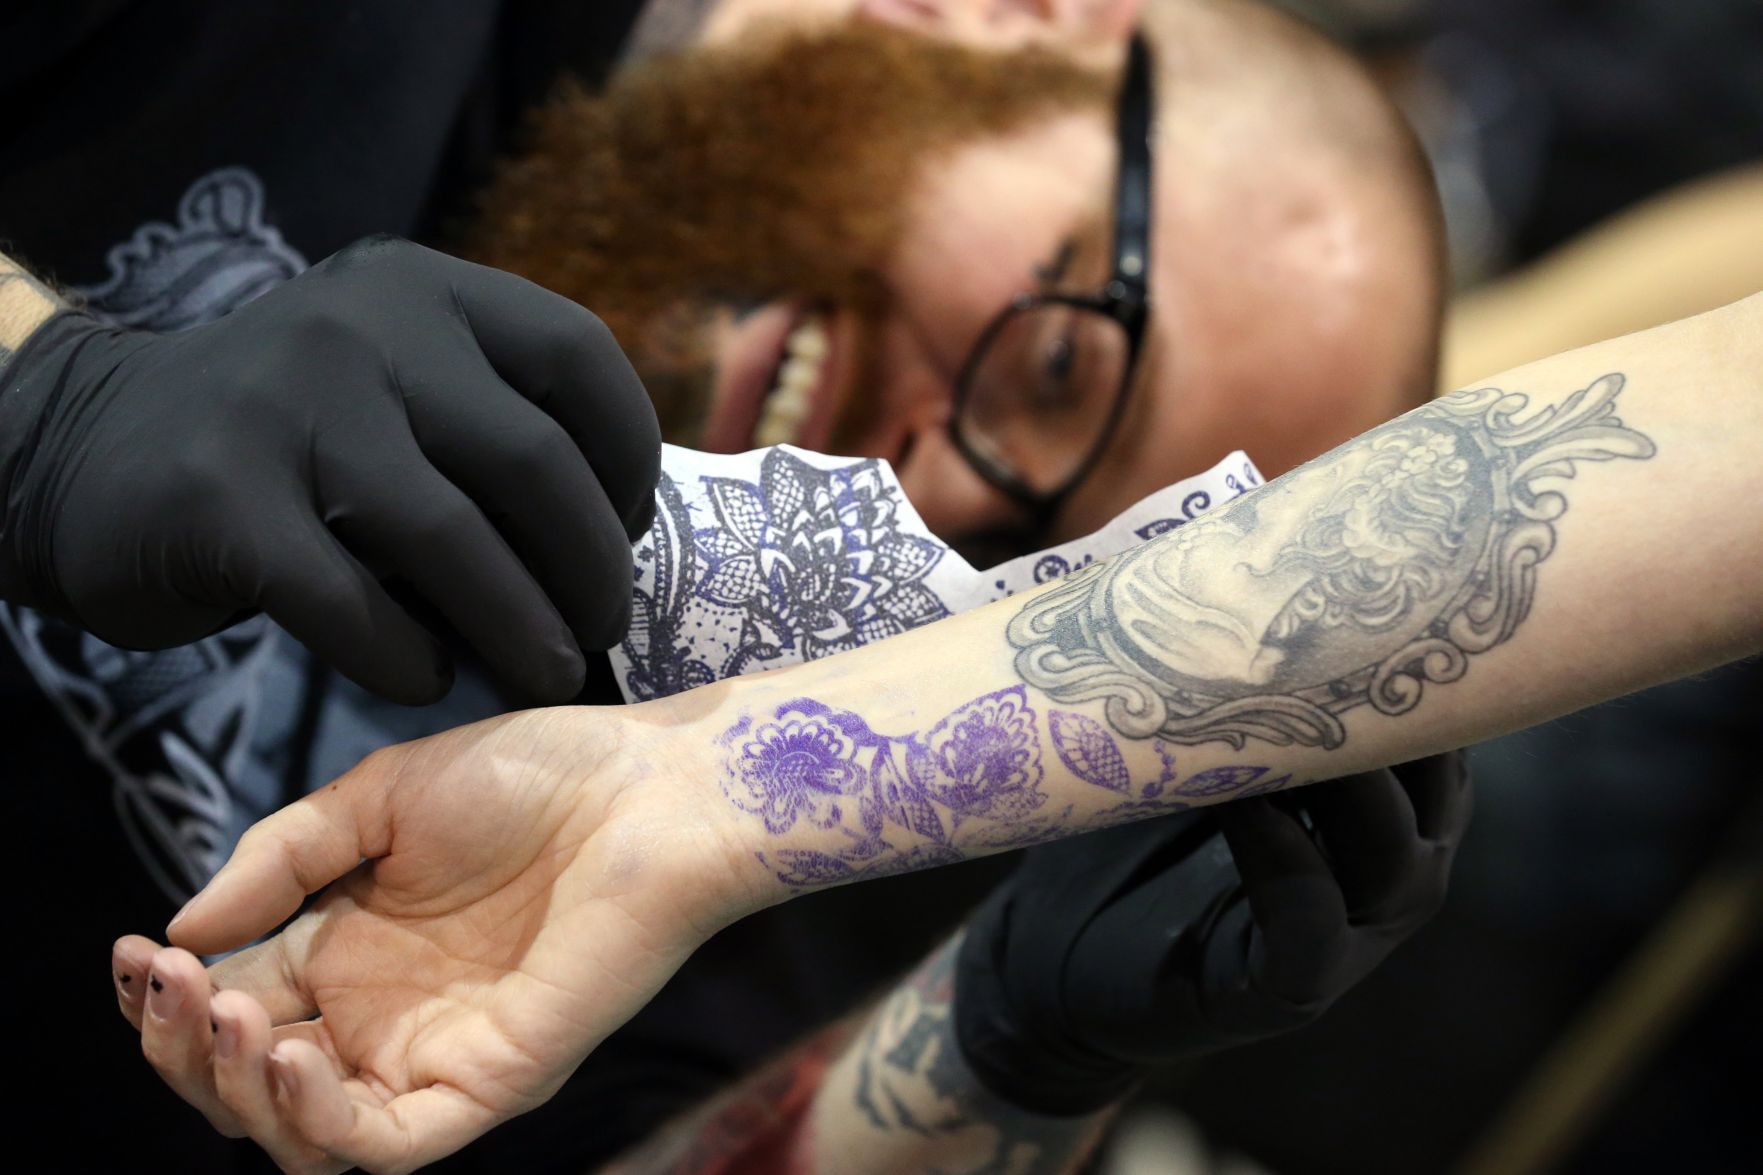 Ink art impresses at inaugural Lancaster Tattoo Art Festival photos   Local News  lancasteronlinecom